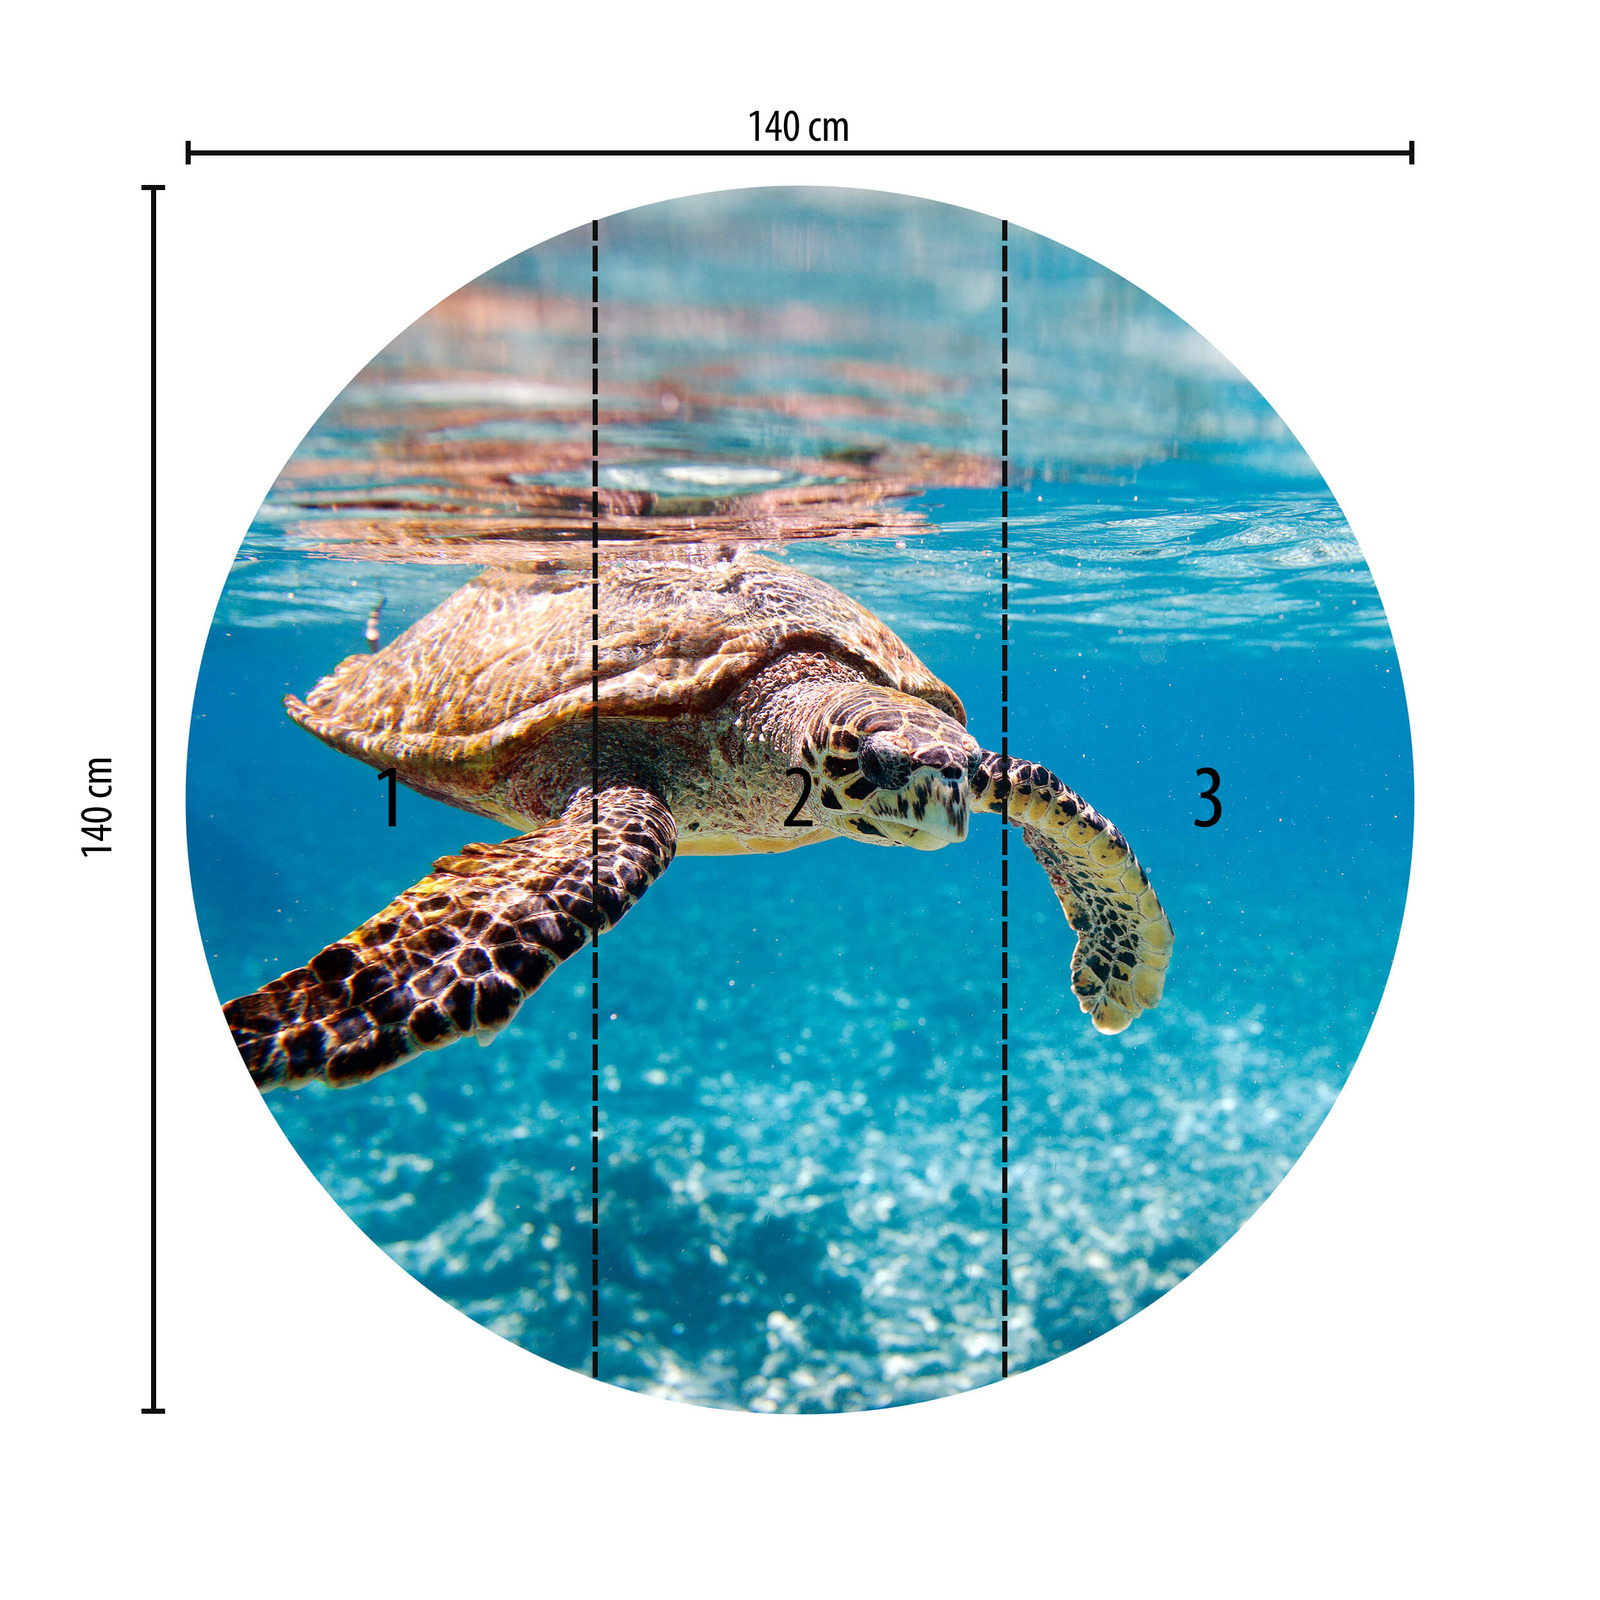             Muurschildering ronde schildpad onder water
        